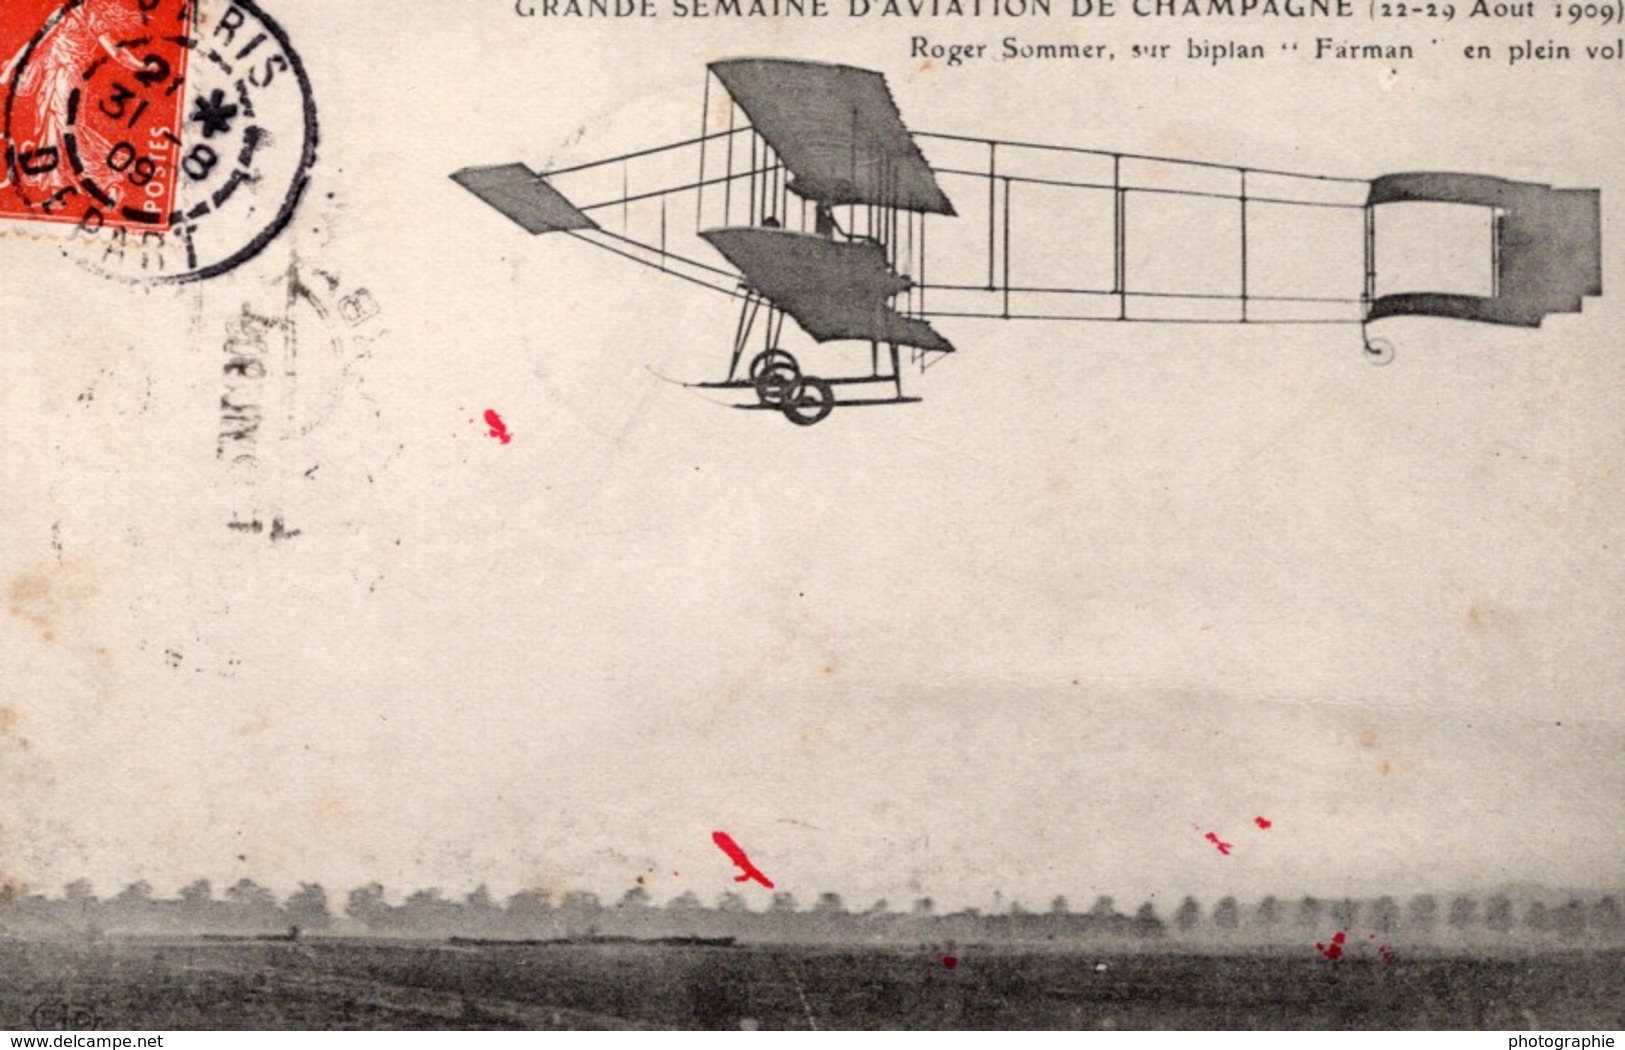 Aviation Ballons Lot de Cartes postales envoyes a l'Aeronaute Charles Gilbert vers 1910